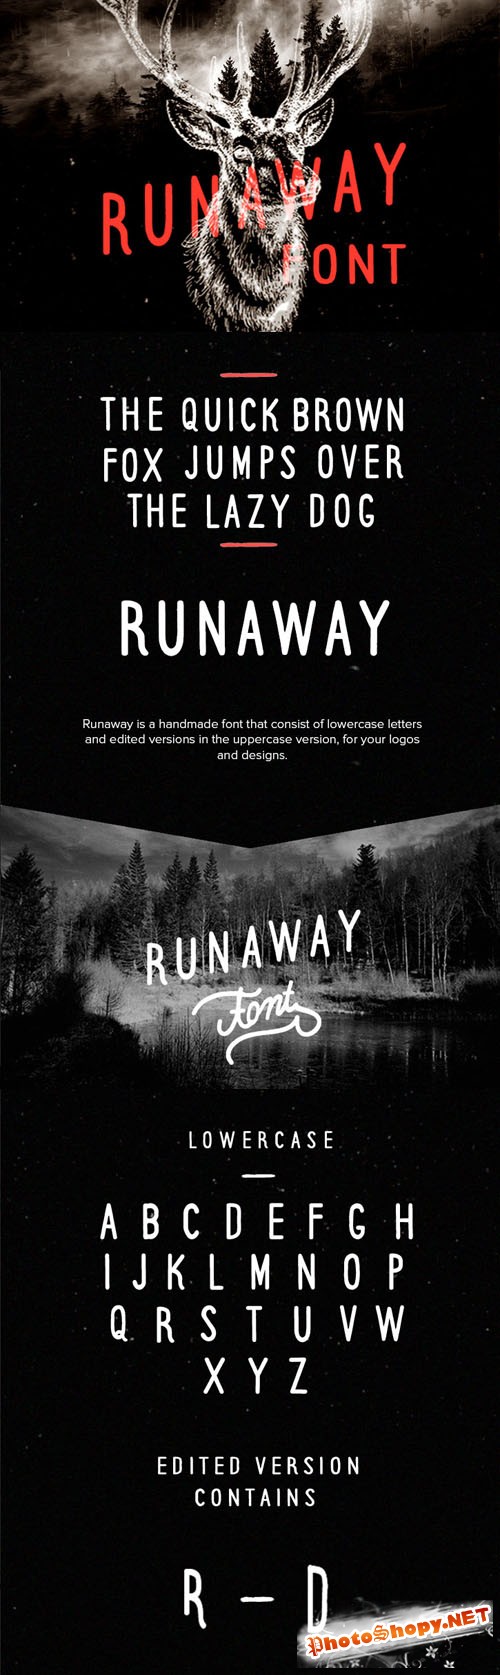 Runaway Retro/Vintage Hand Drawn Custom Font